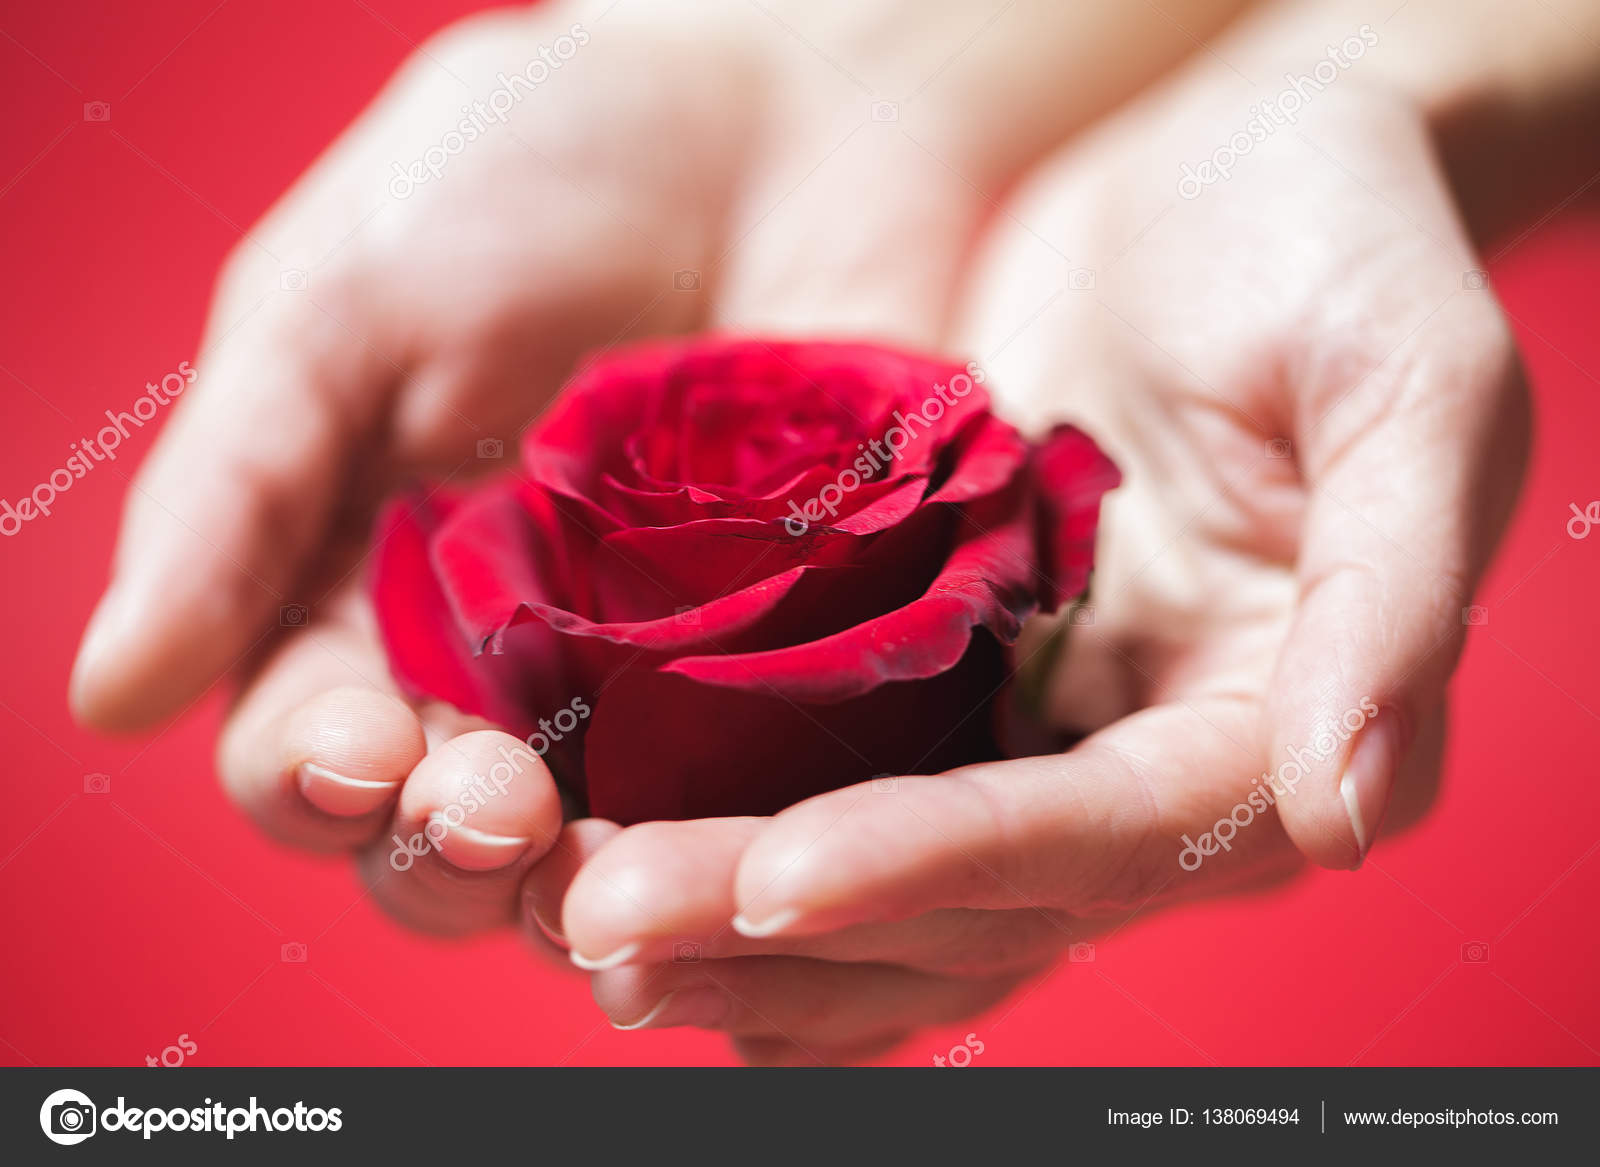 depositphotos_138069494-stock-photo-beautiful-red-rose-in-woman.jpg